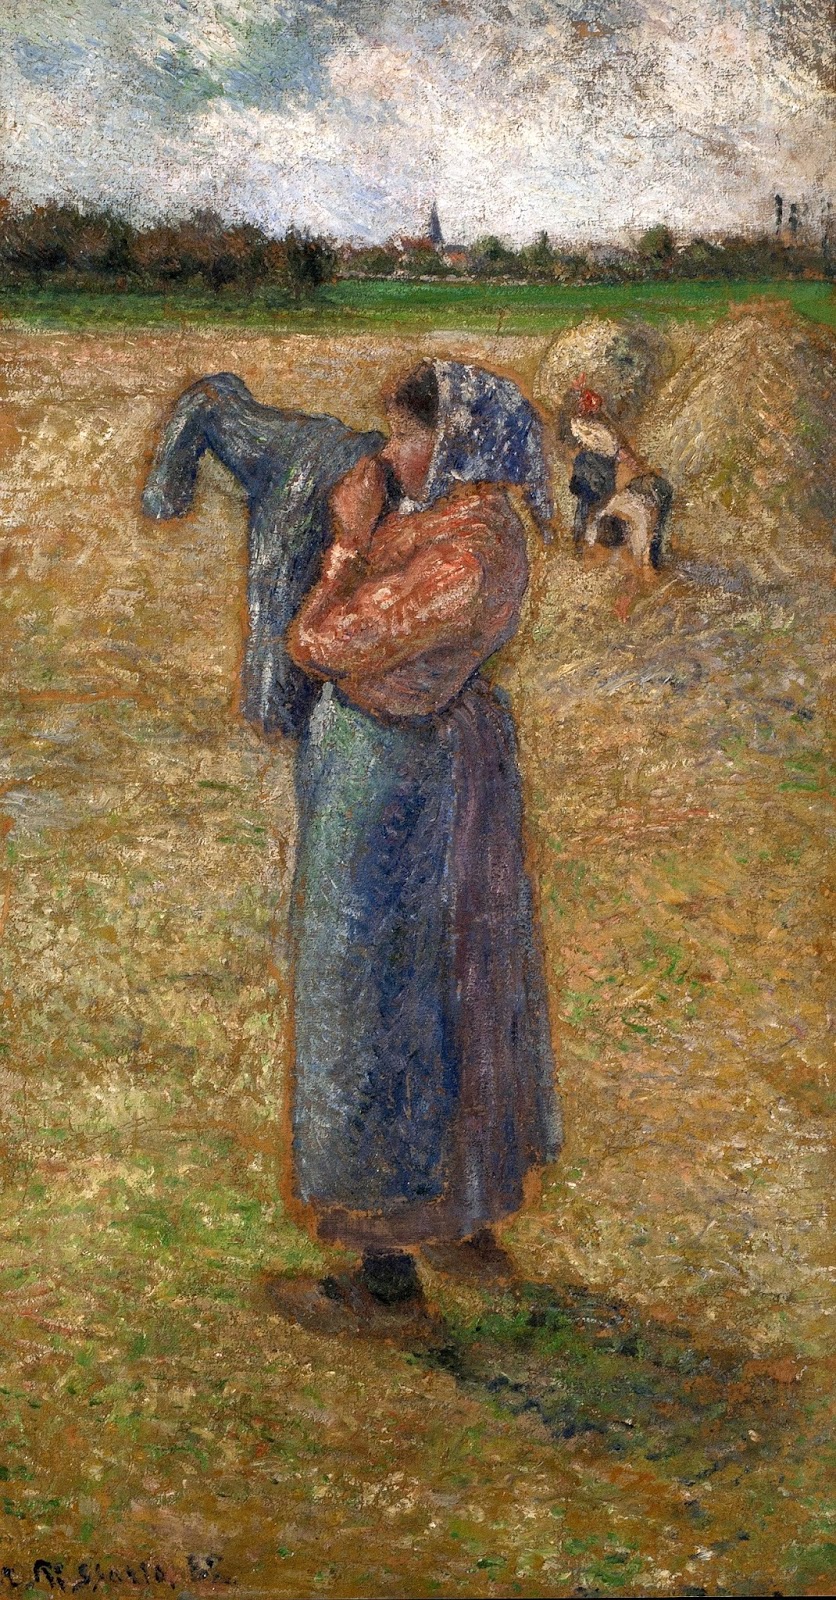 Camille+Pissarro-1830-1903 (327).jpg